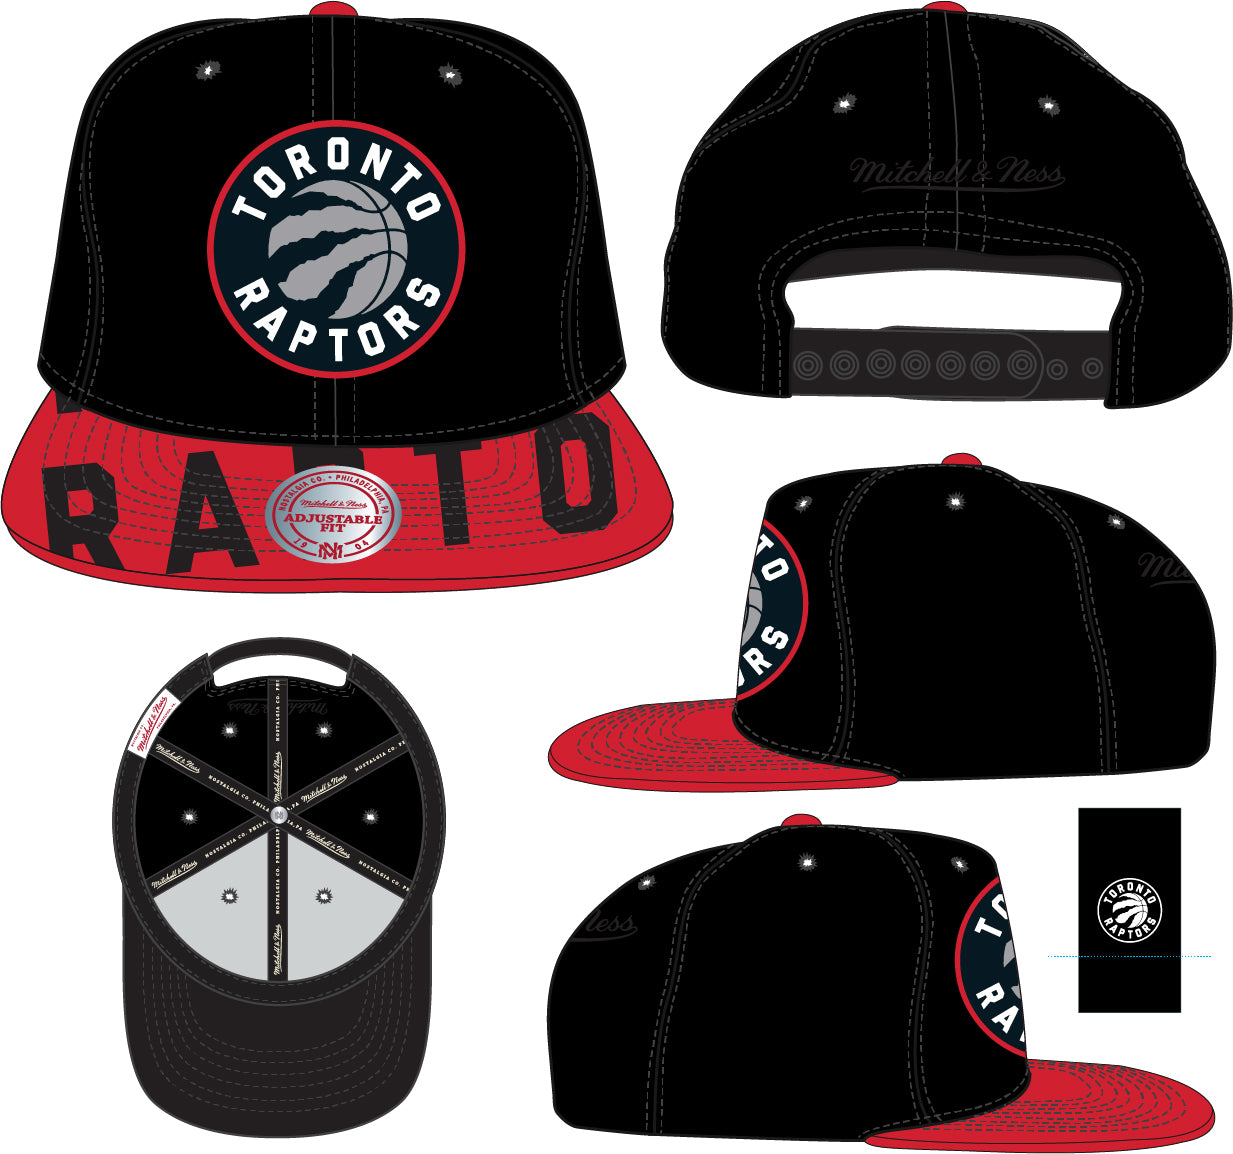 Men's Mitchell & Ness Black/Red Toronto Raptors Hardwood Classics Snapshot Adjustable Snapback Hat